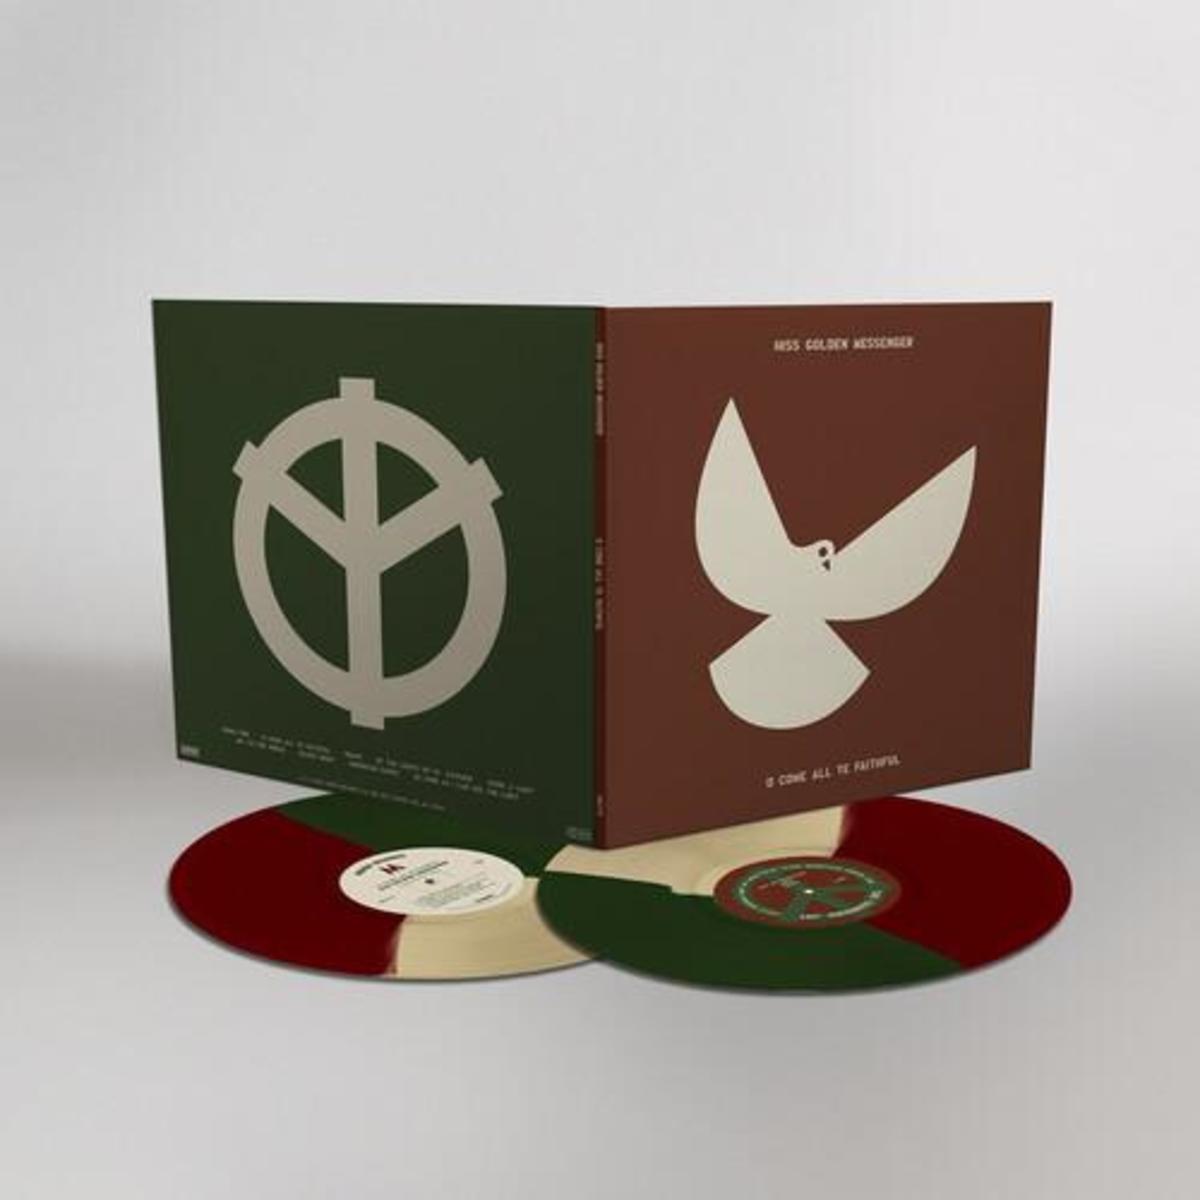 Hiss Golden Messenger's O Come All Ye Faithful on bone/green/red tricolor 2-LP vinyl.